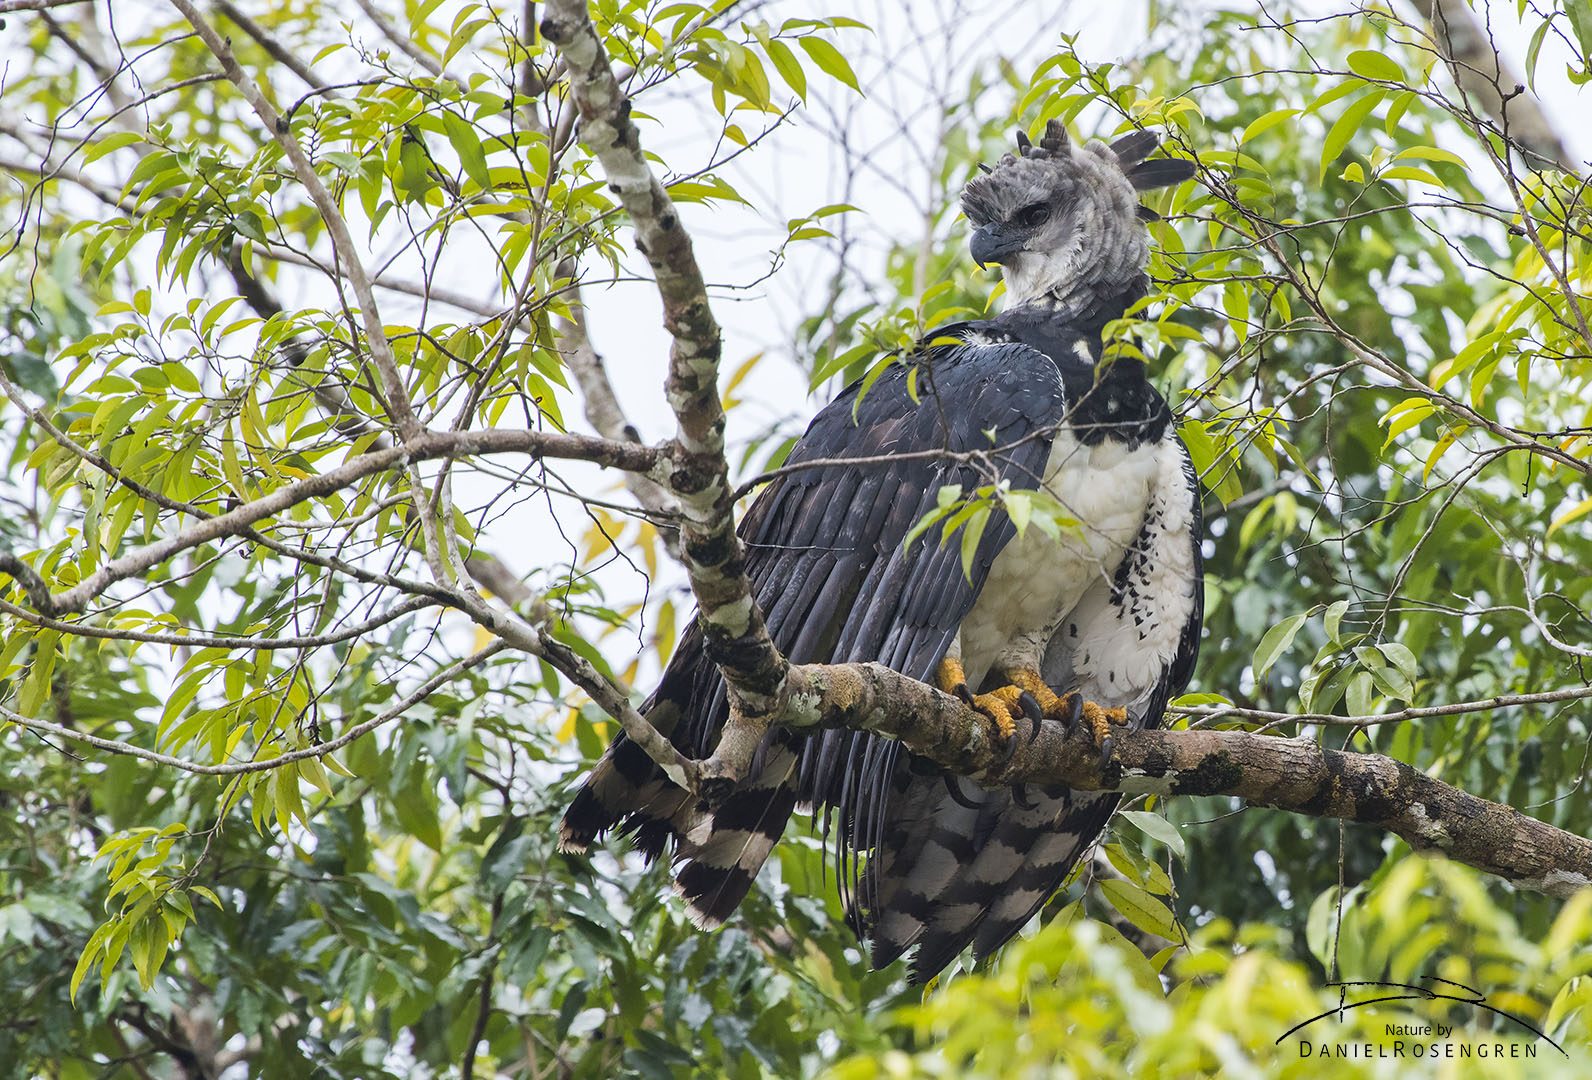 A Harpy Eagle seen along the river near Yaguas. © Daniel Rosengren